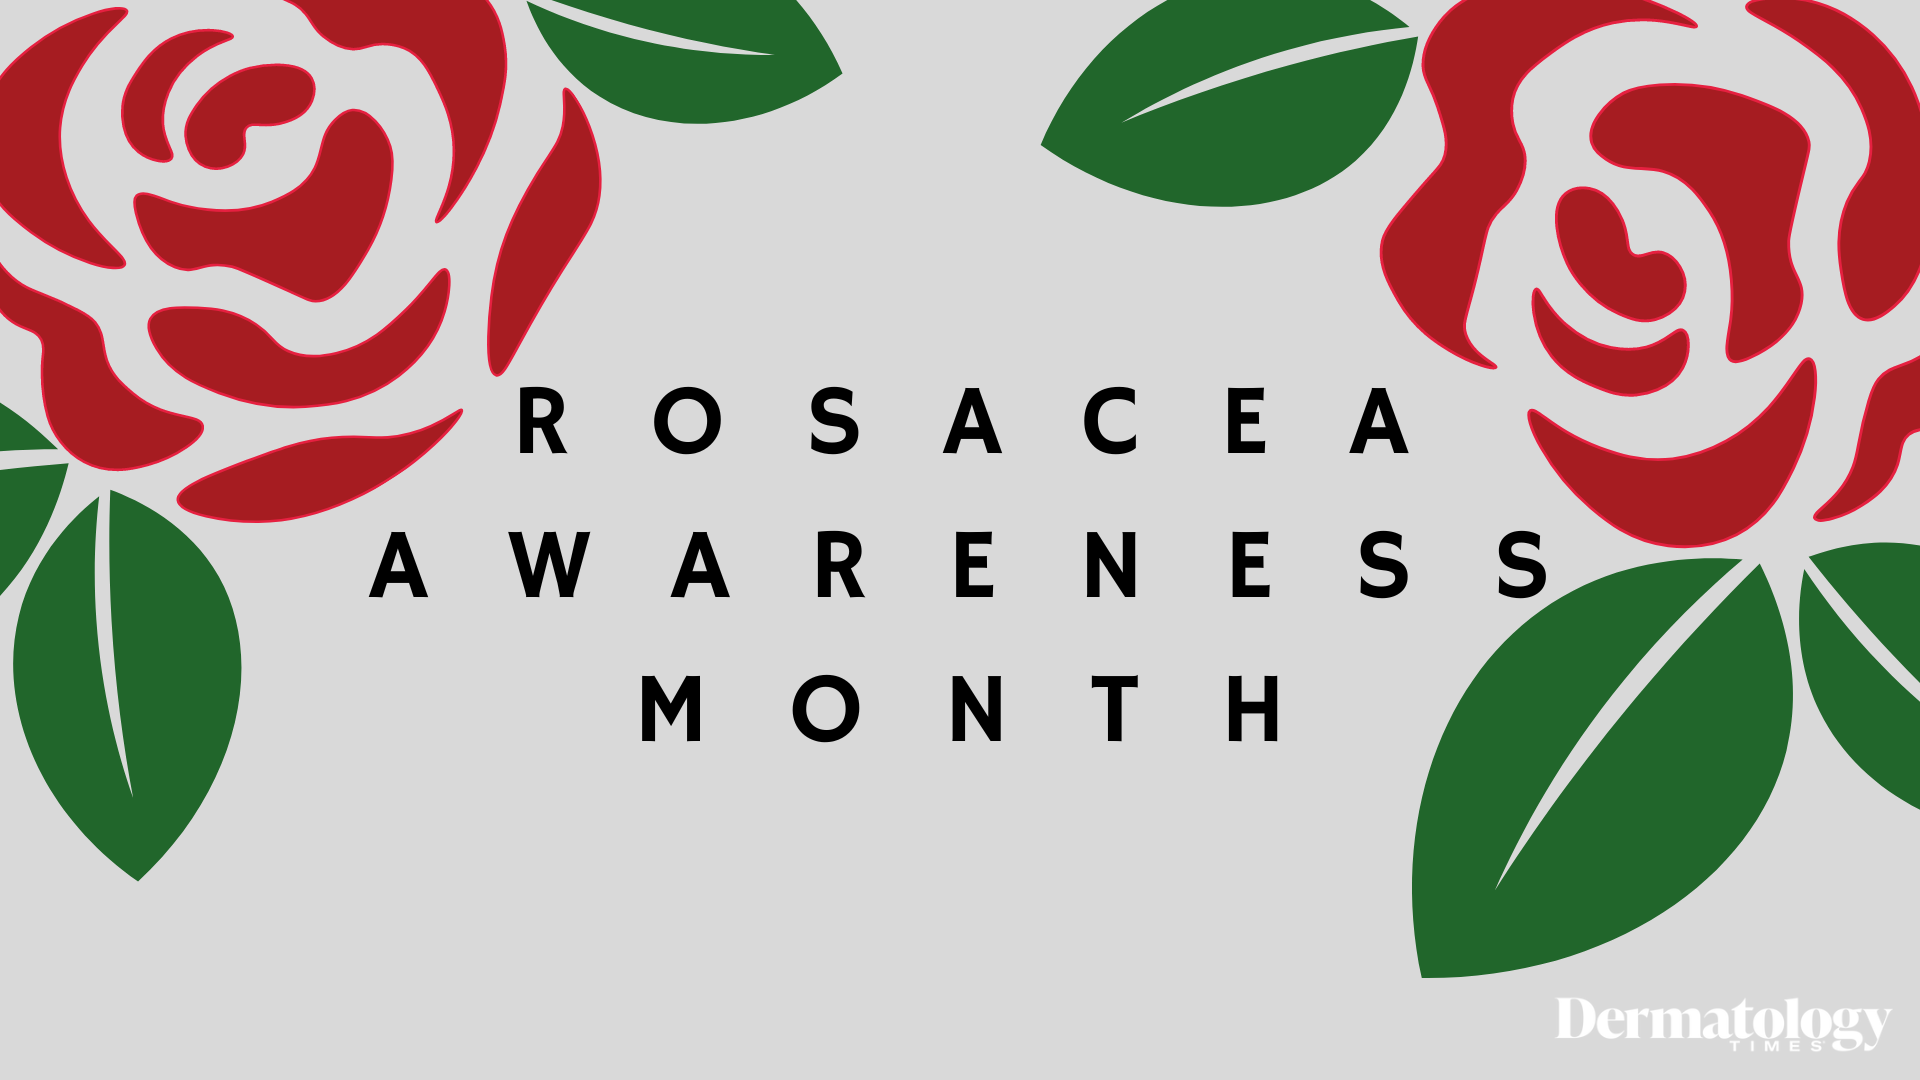 Rosacea Awareness Month logo | Image credit: Dermatology Times